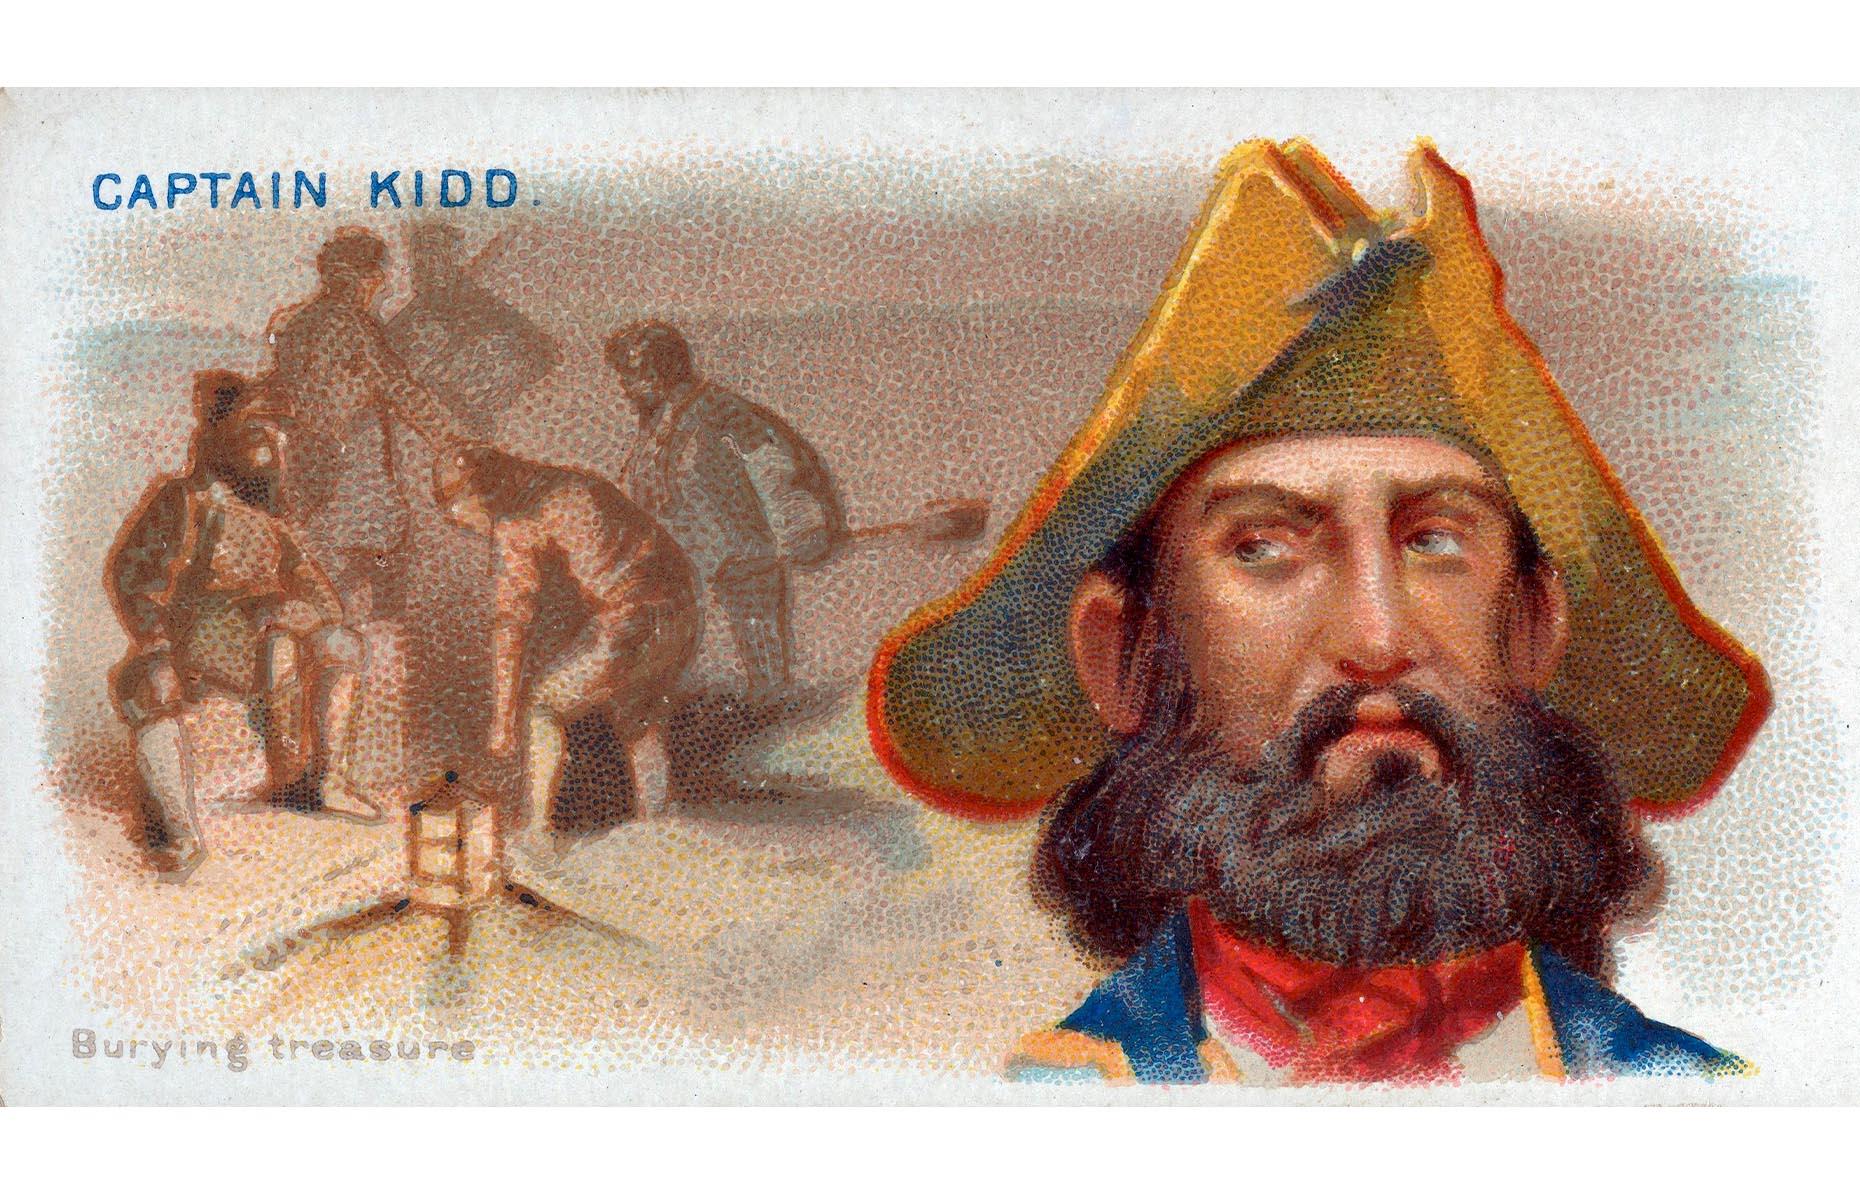 Captain Kidd's treasure hoard